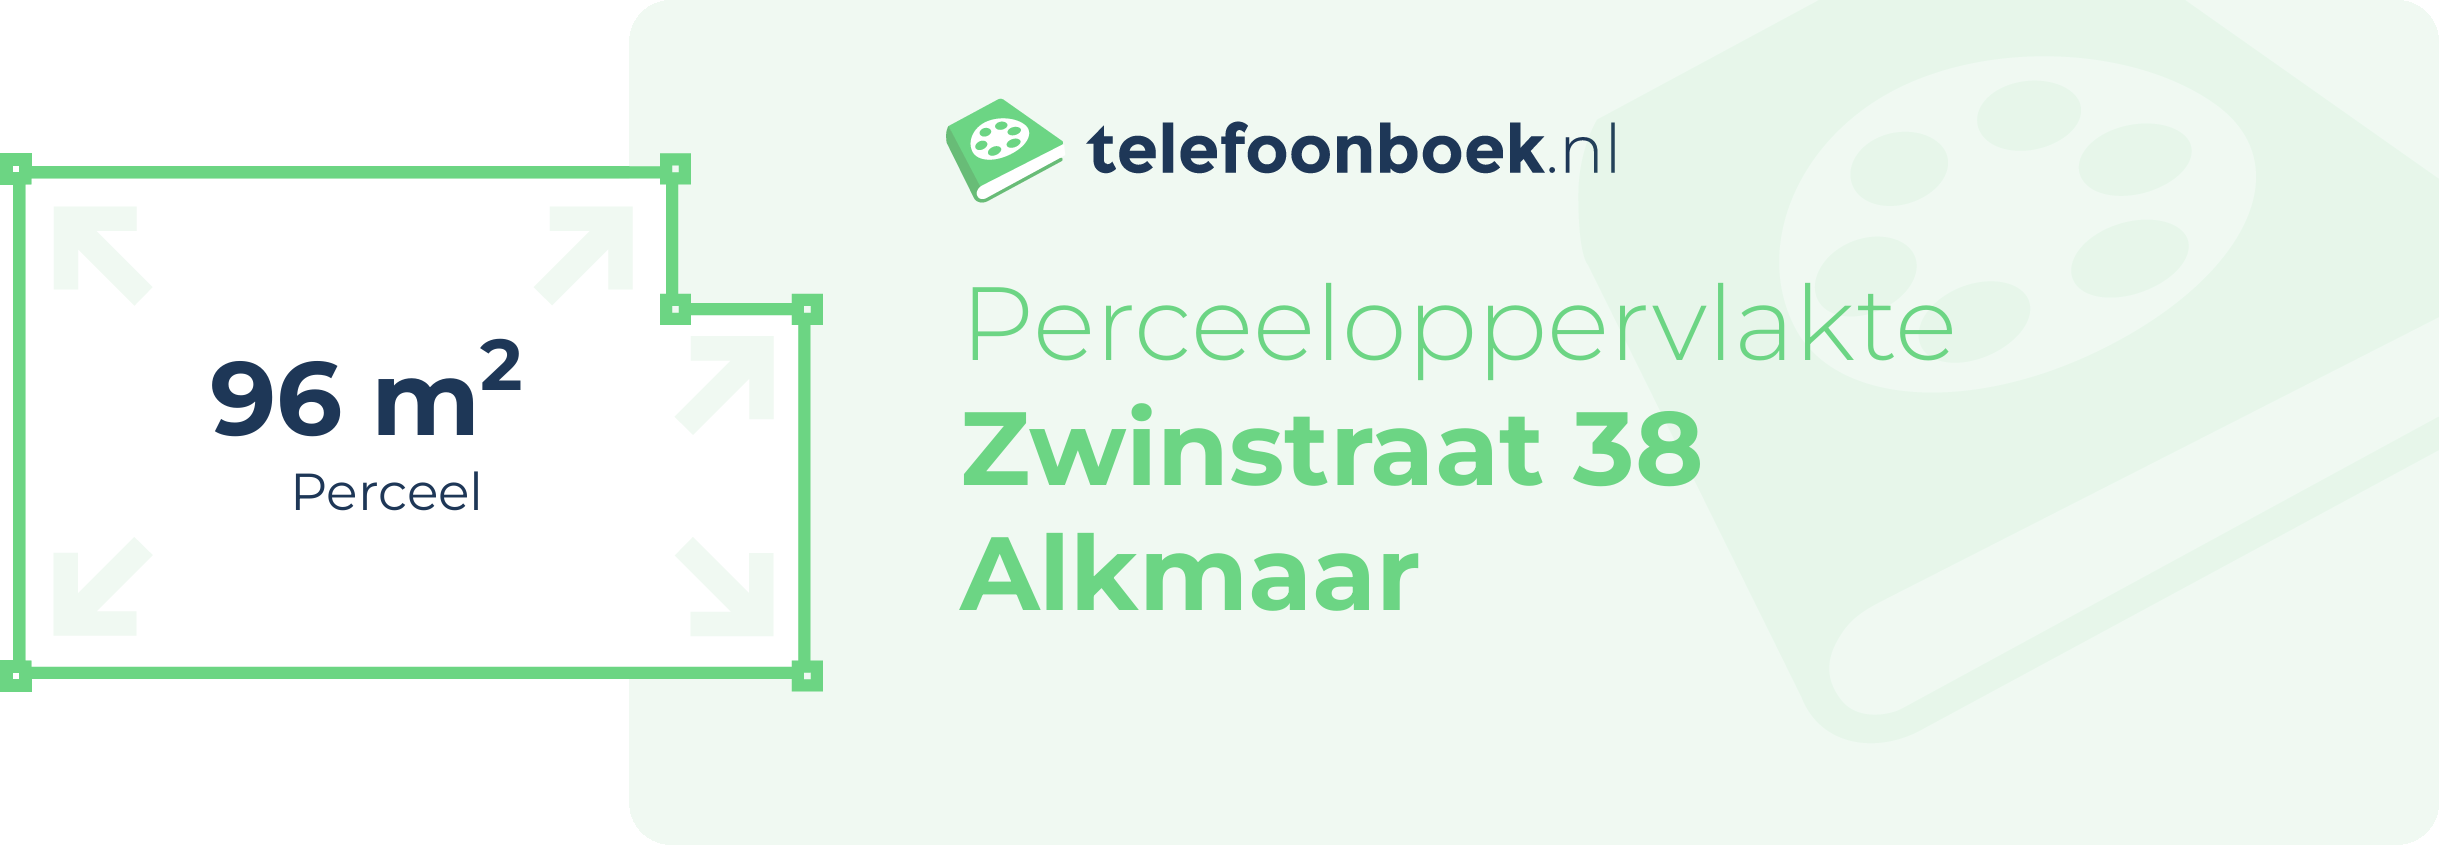 Perceeloppervlakte Zwinstraat 38 Alkmaar